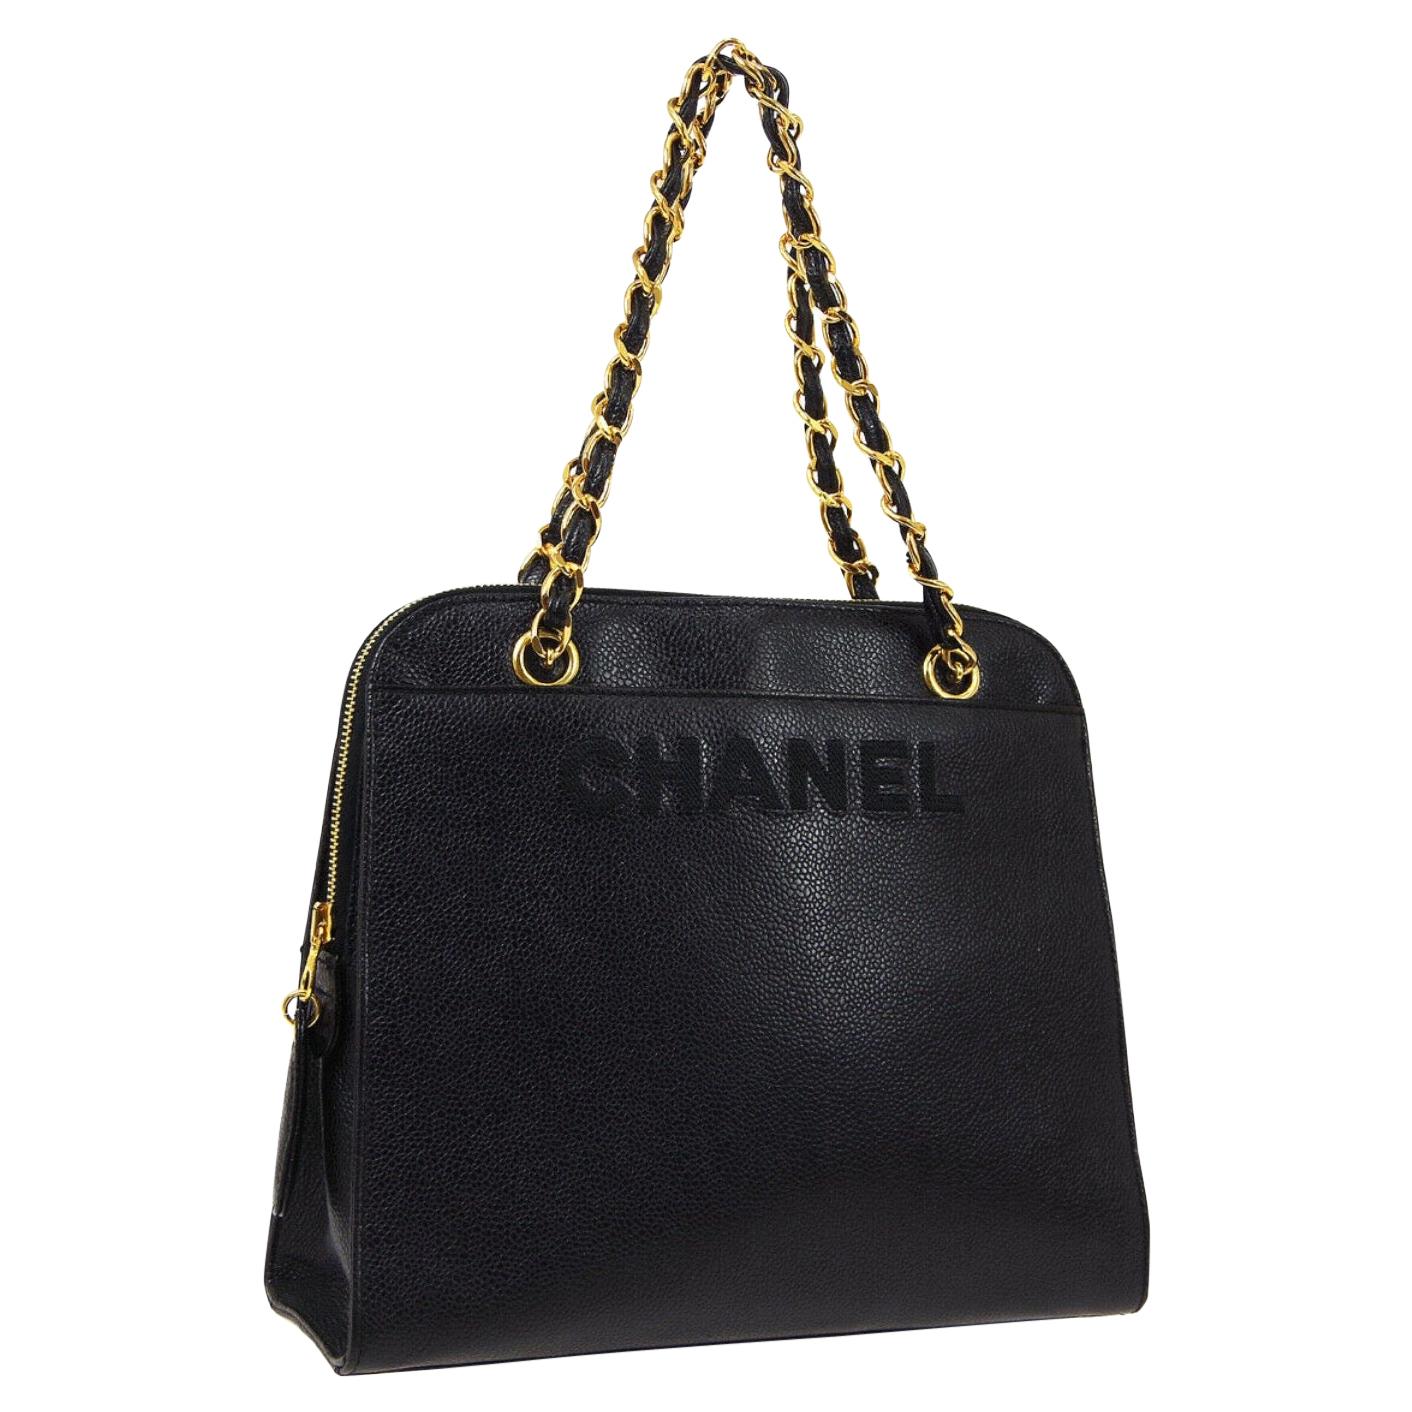 Chanel Black Leather Gold Chain Top Handle Satchel Shoulder Tote Bag